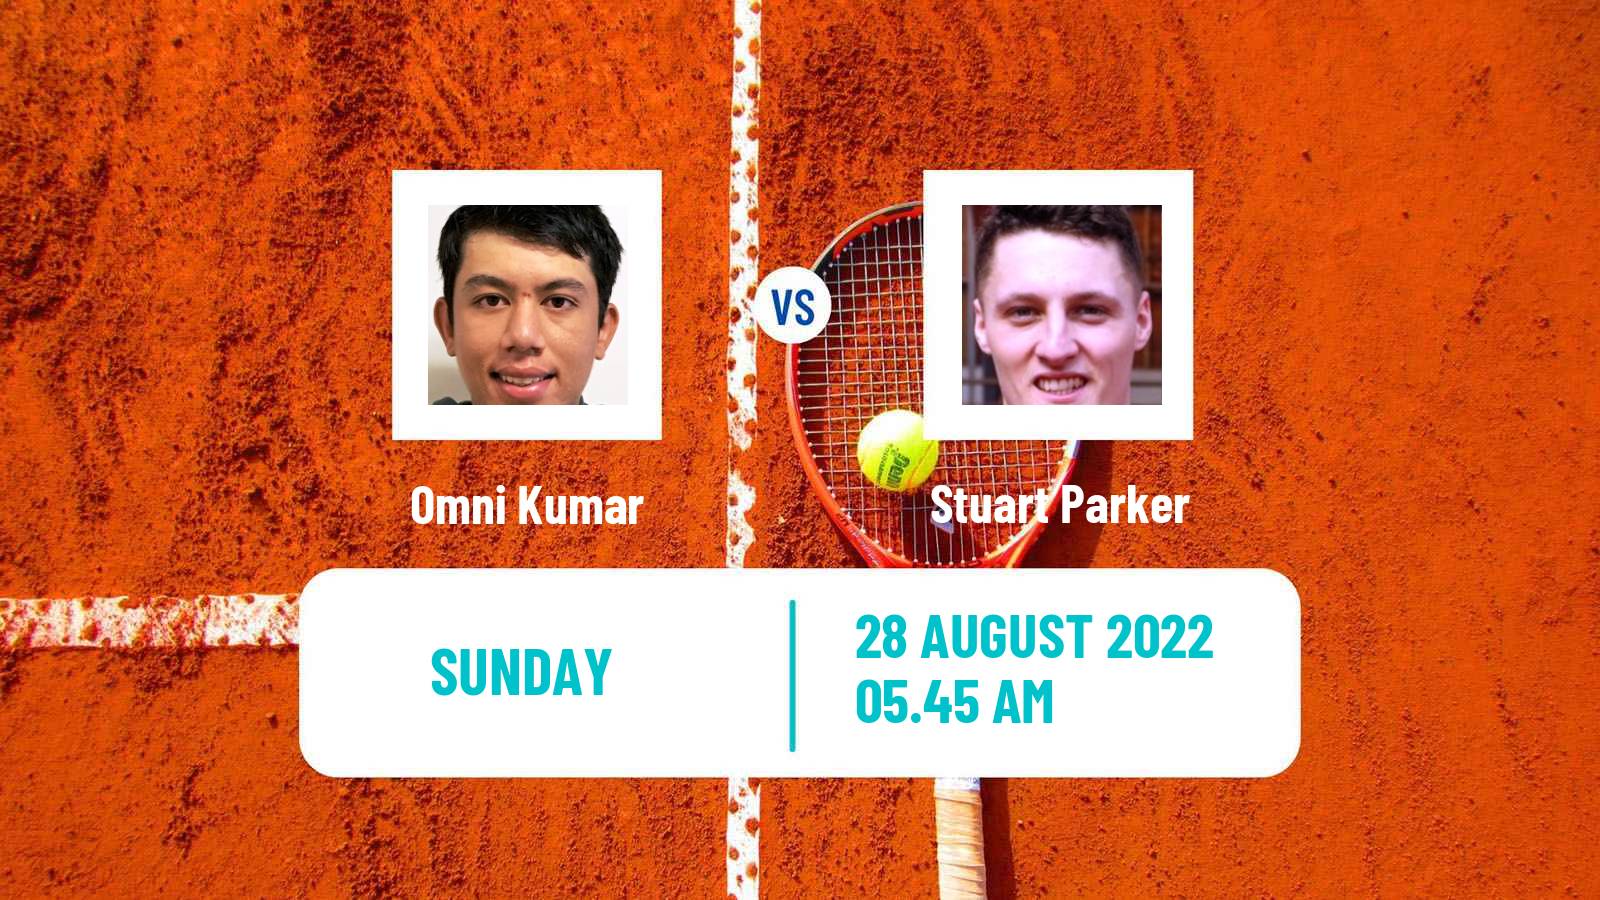 Tennis ATP Challenger Omni Kumar - Stuart Parker